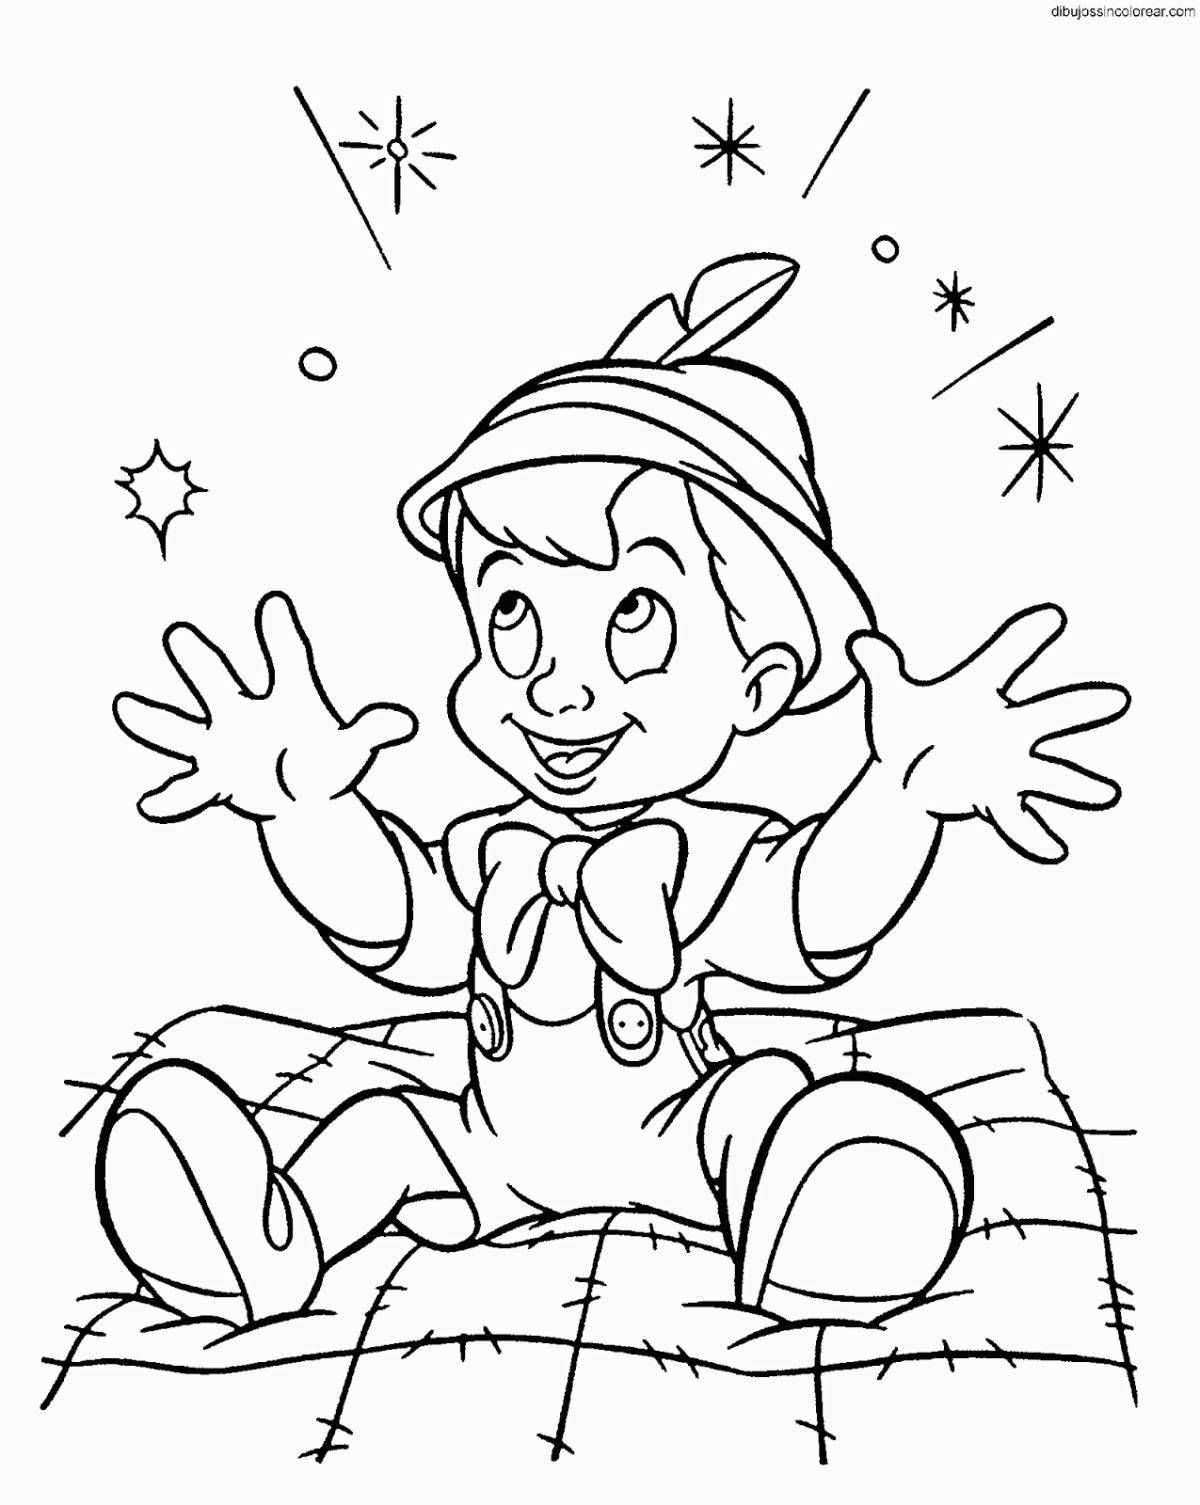 Magic pinocchio coloring book for kids